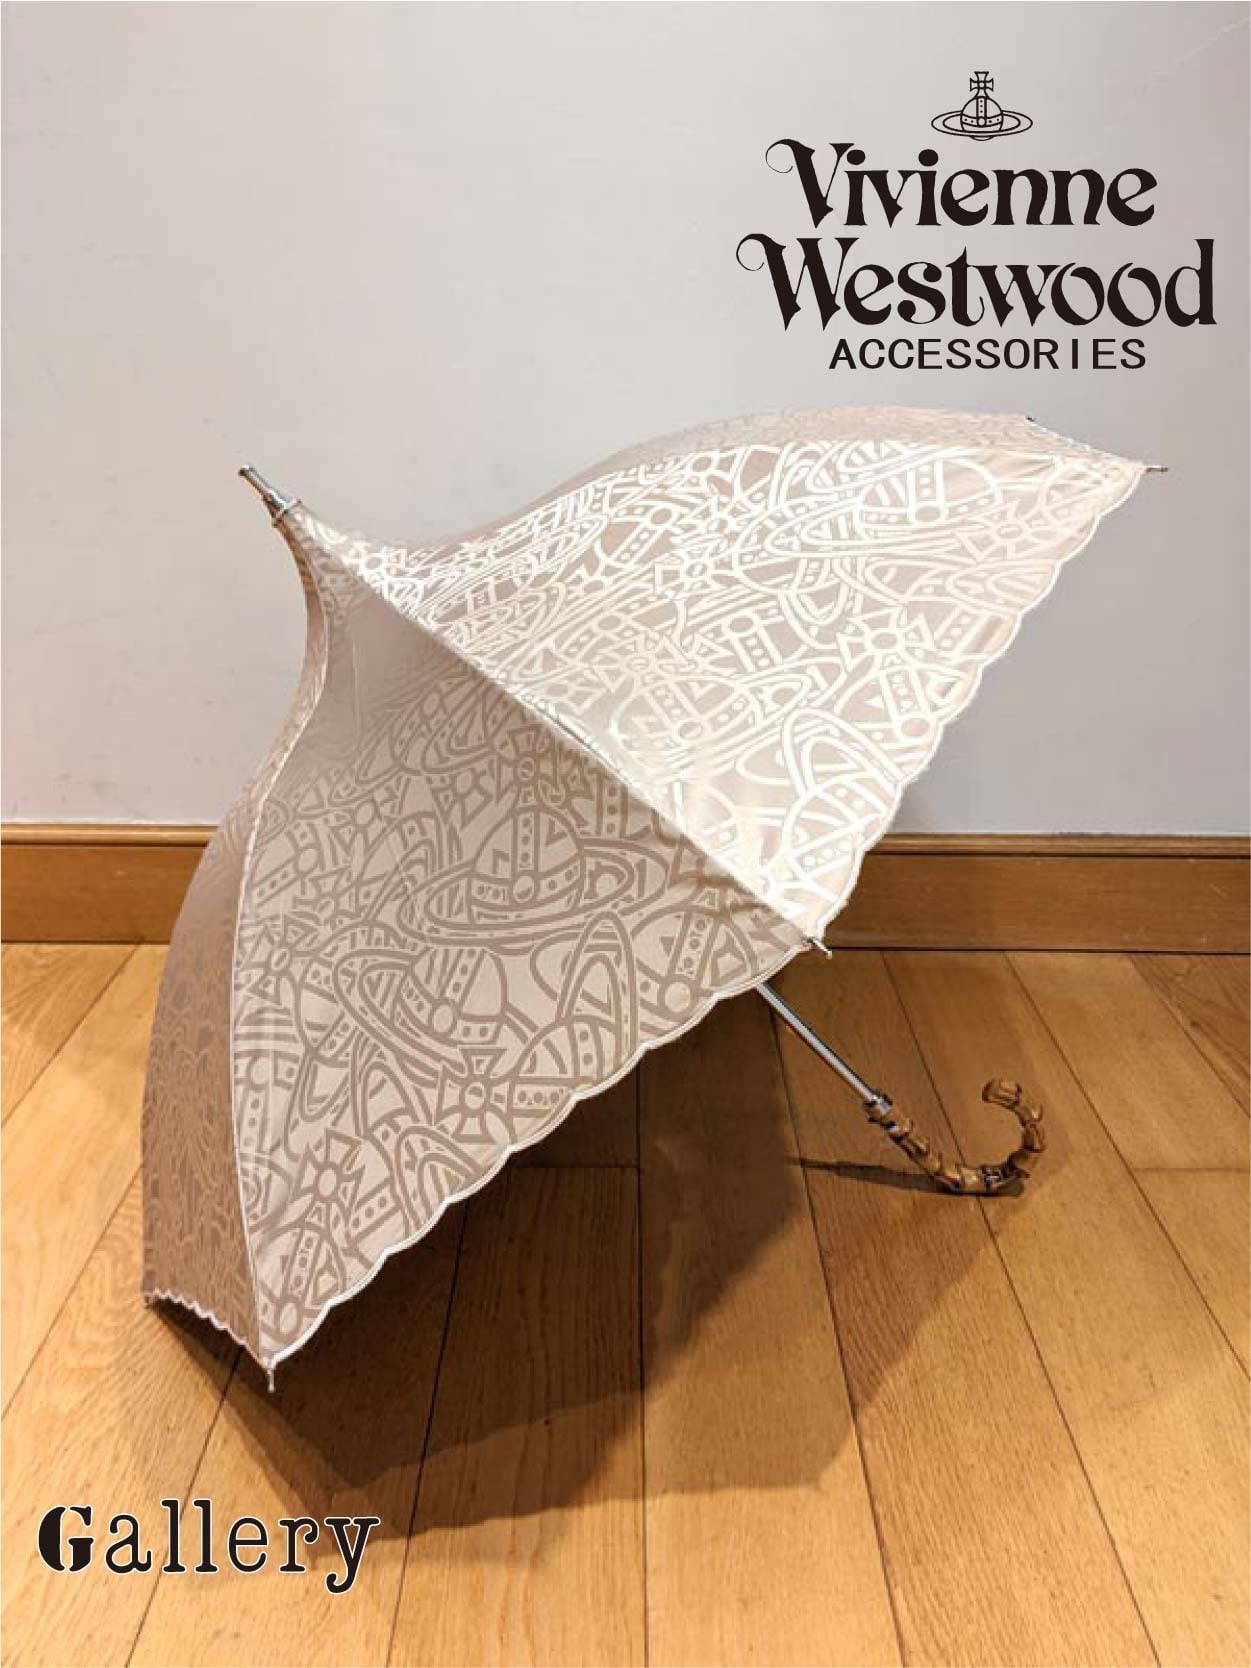 Vivienne Westwood ORB REPEAT 晴雨兼用日傘が入荷致しました 